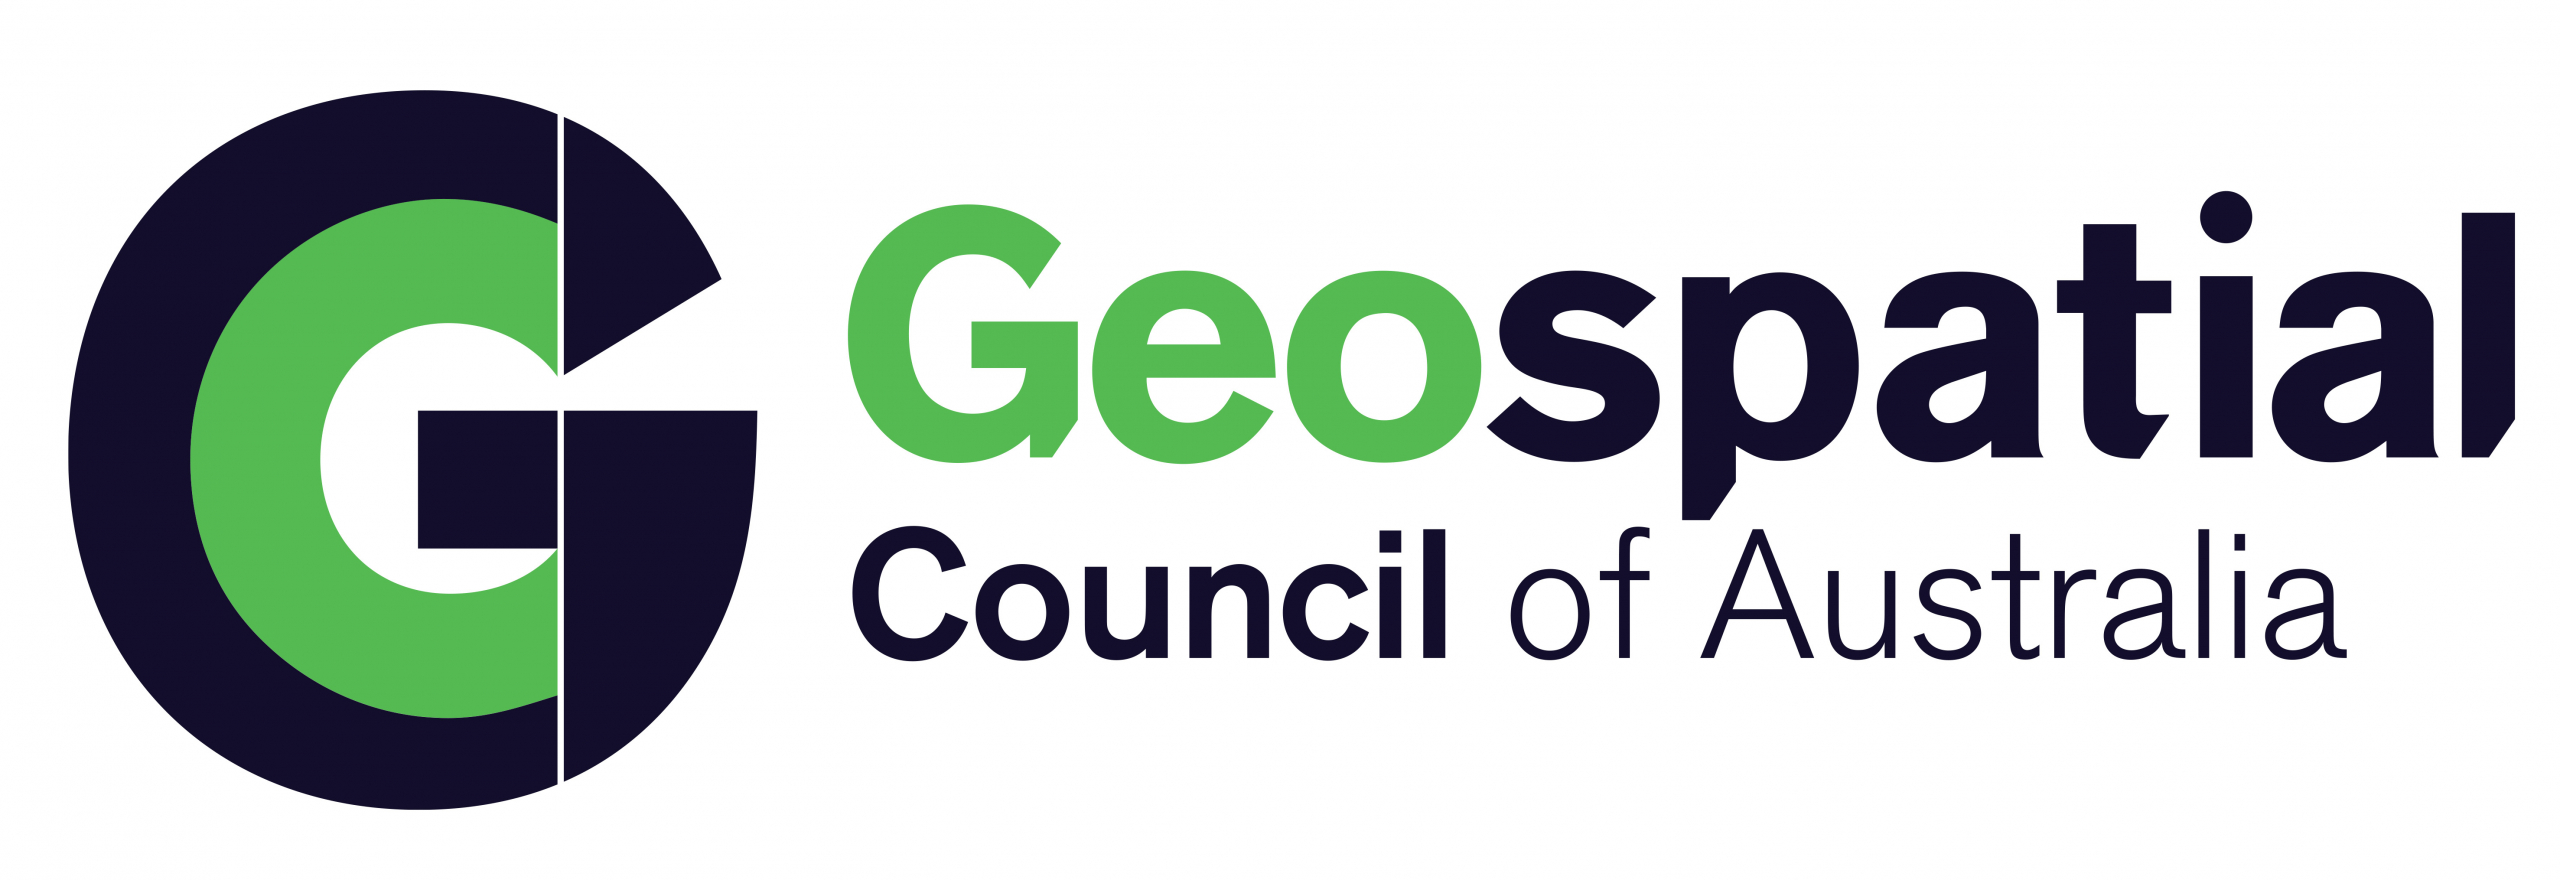 Geospatial Council of Australia